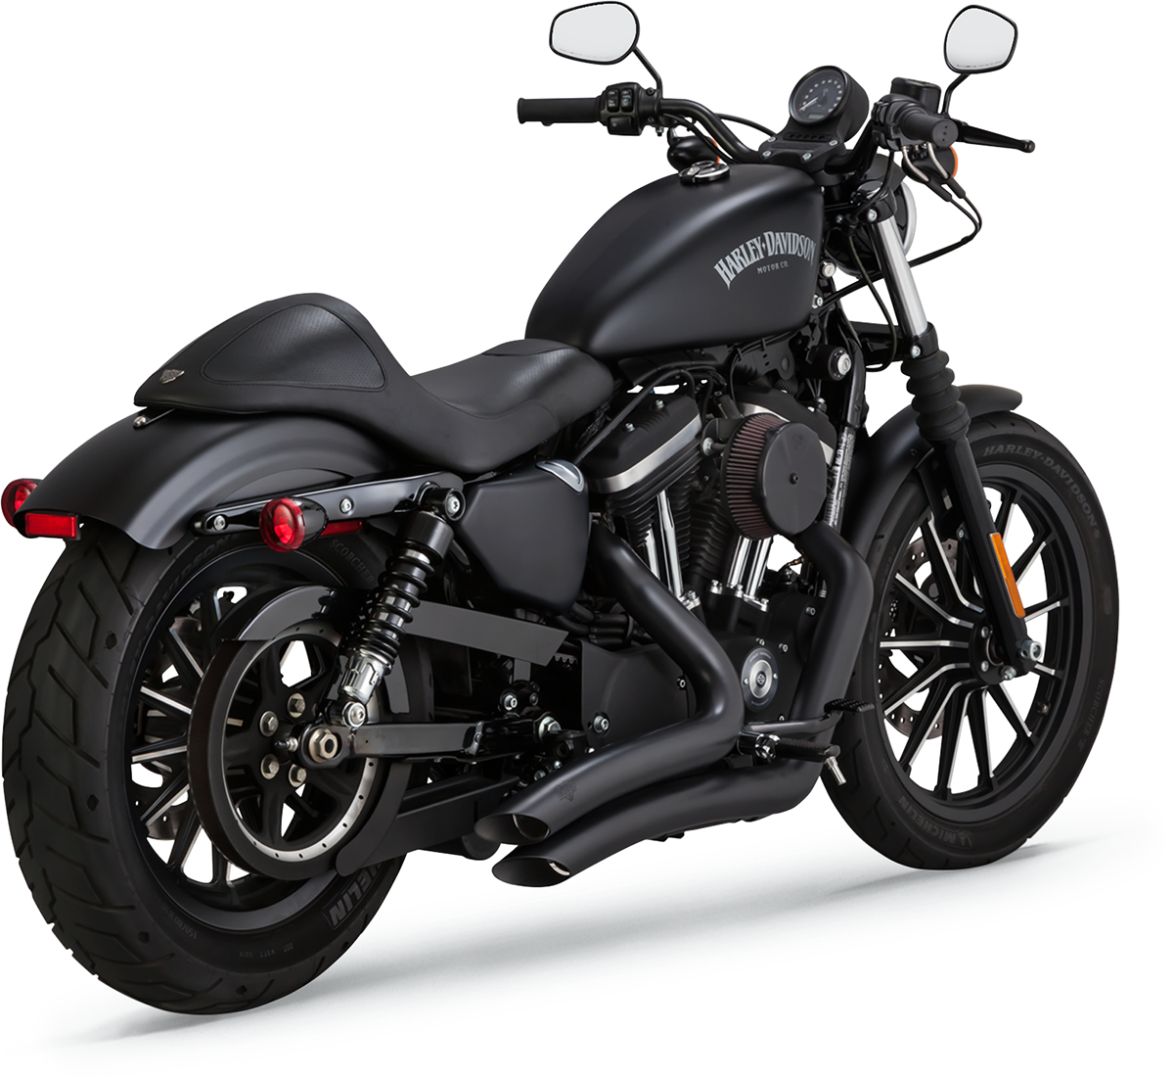 Vance & hines KIPUFOGÓ SYSTEM BIG RADIUS 2-INTO-2 BLACK Harley Davidson XL 1200 X Forty-Eight motor kipufogó 0